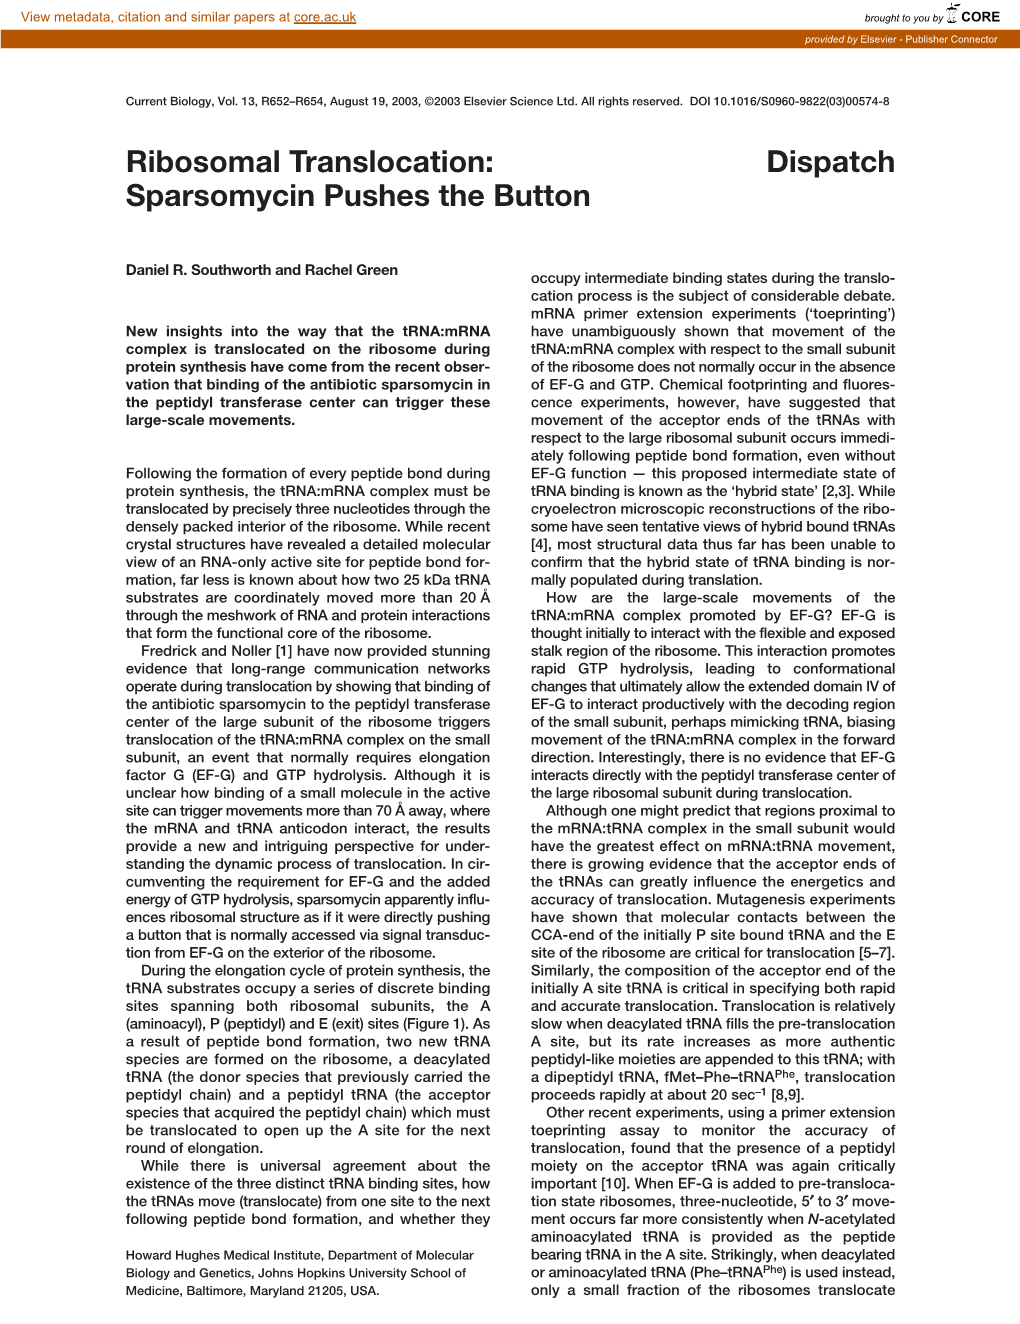 Ribosomal Translocation: Sparsomycin Pushes the Button